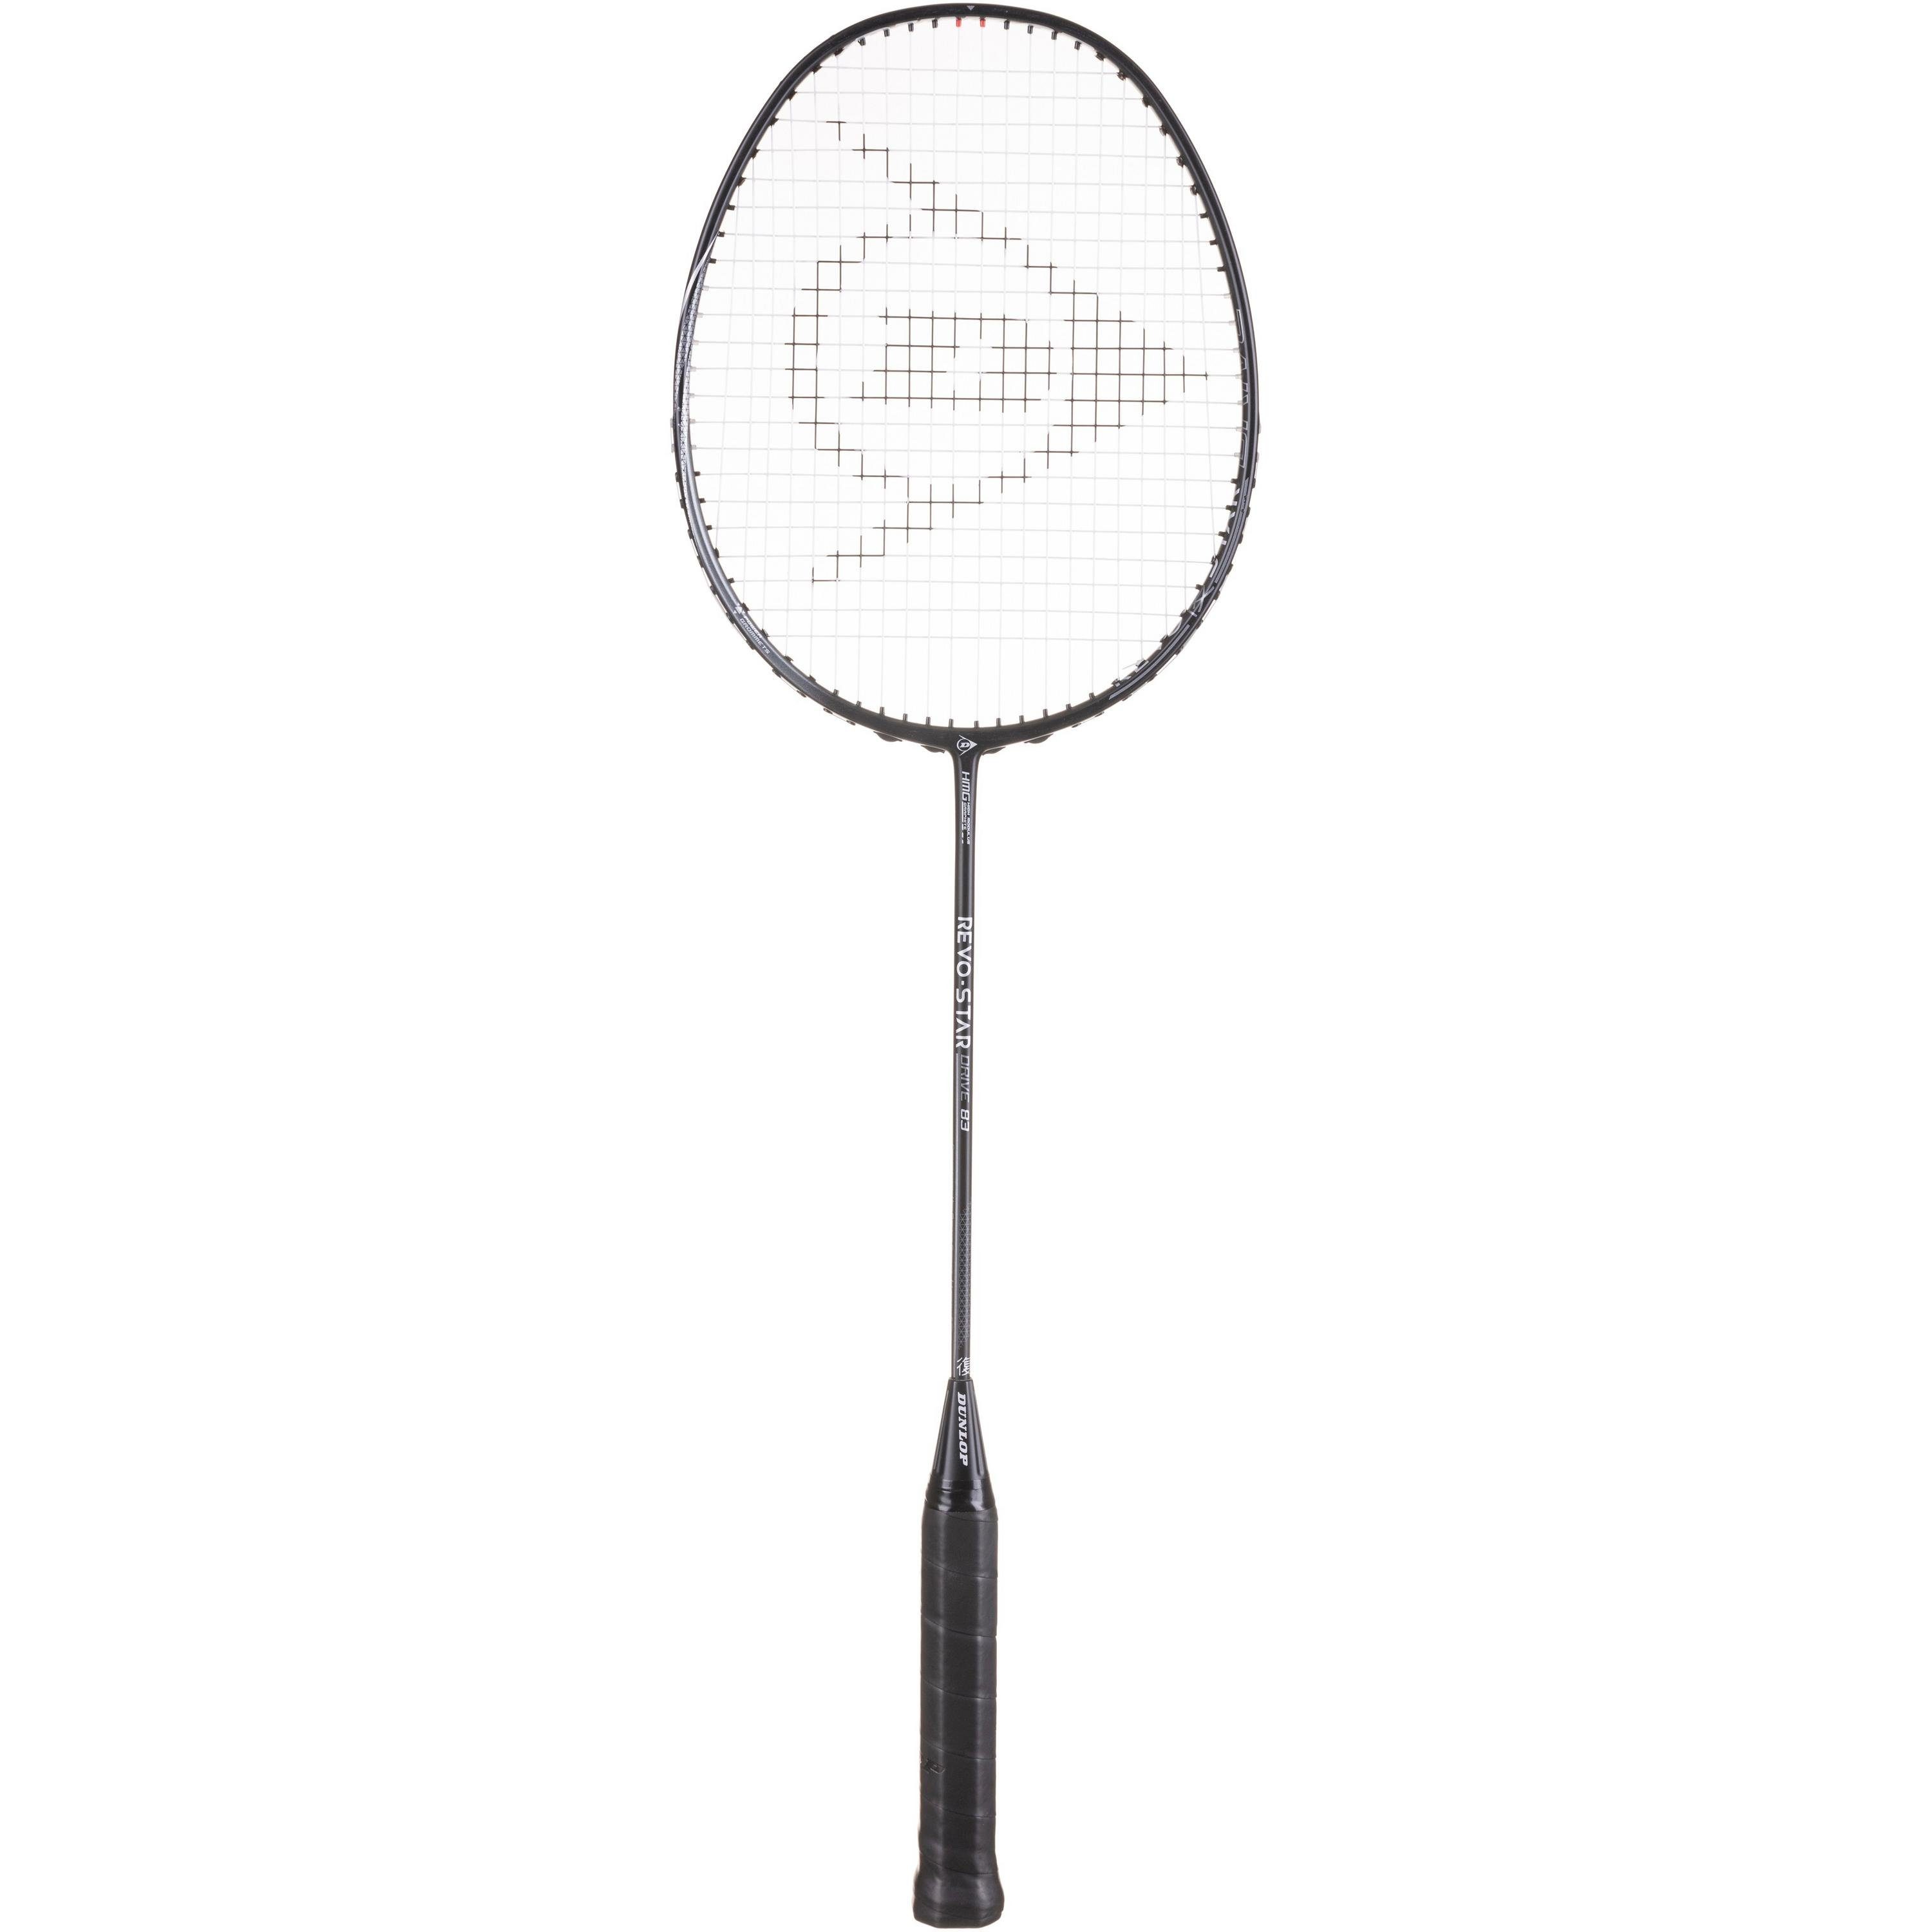 Dunlop Badmintonschläger REVO-STAR DRIVE 83 BLACK/SILVER